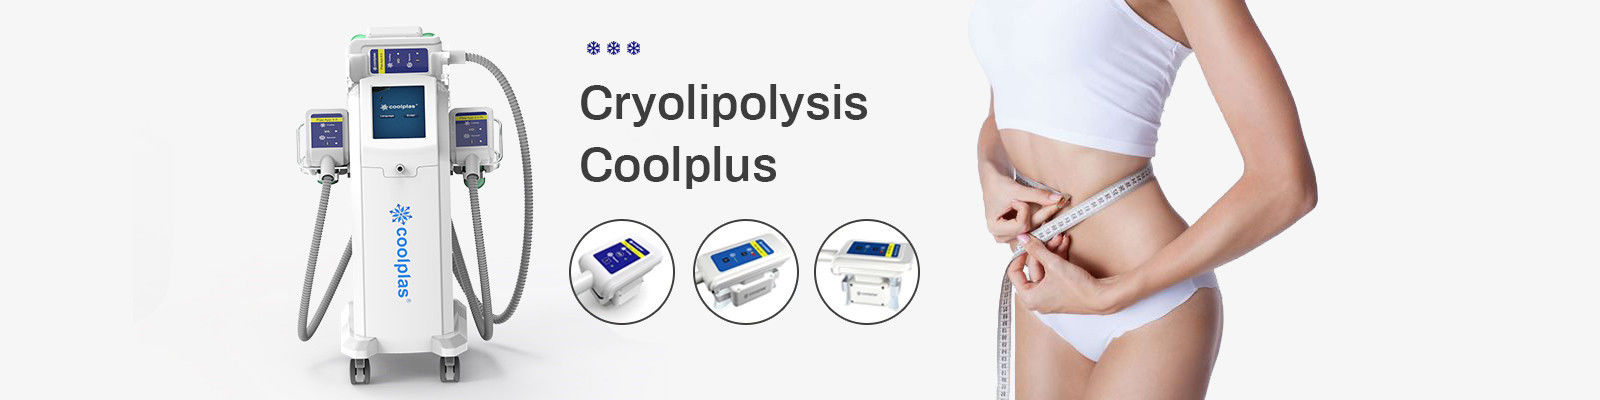 Cryolipolysis, das Maschine abnimmt